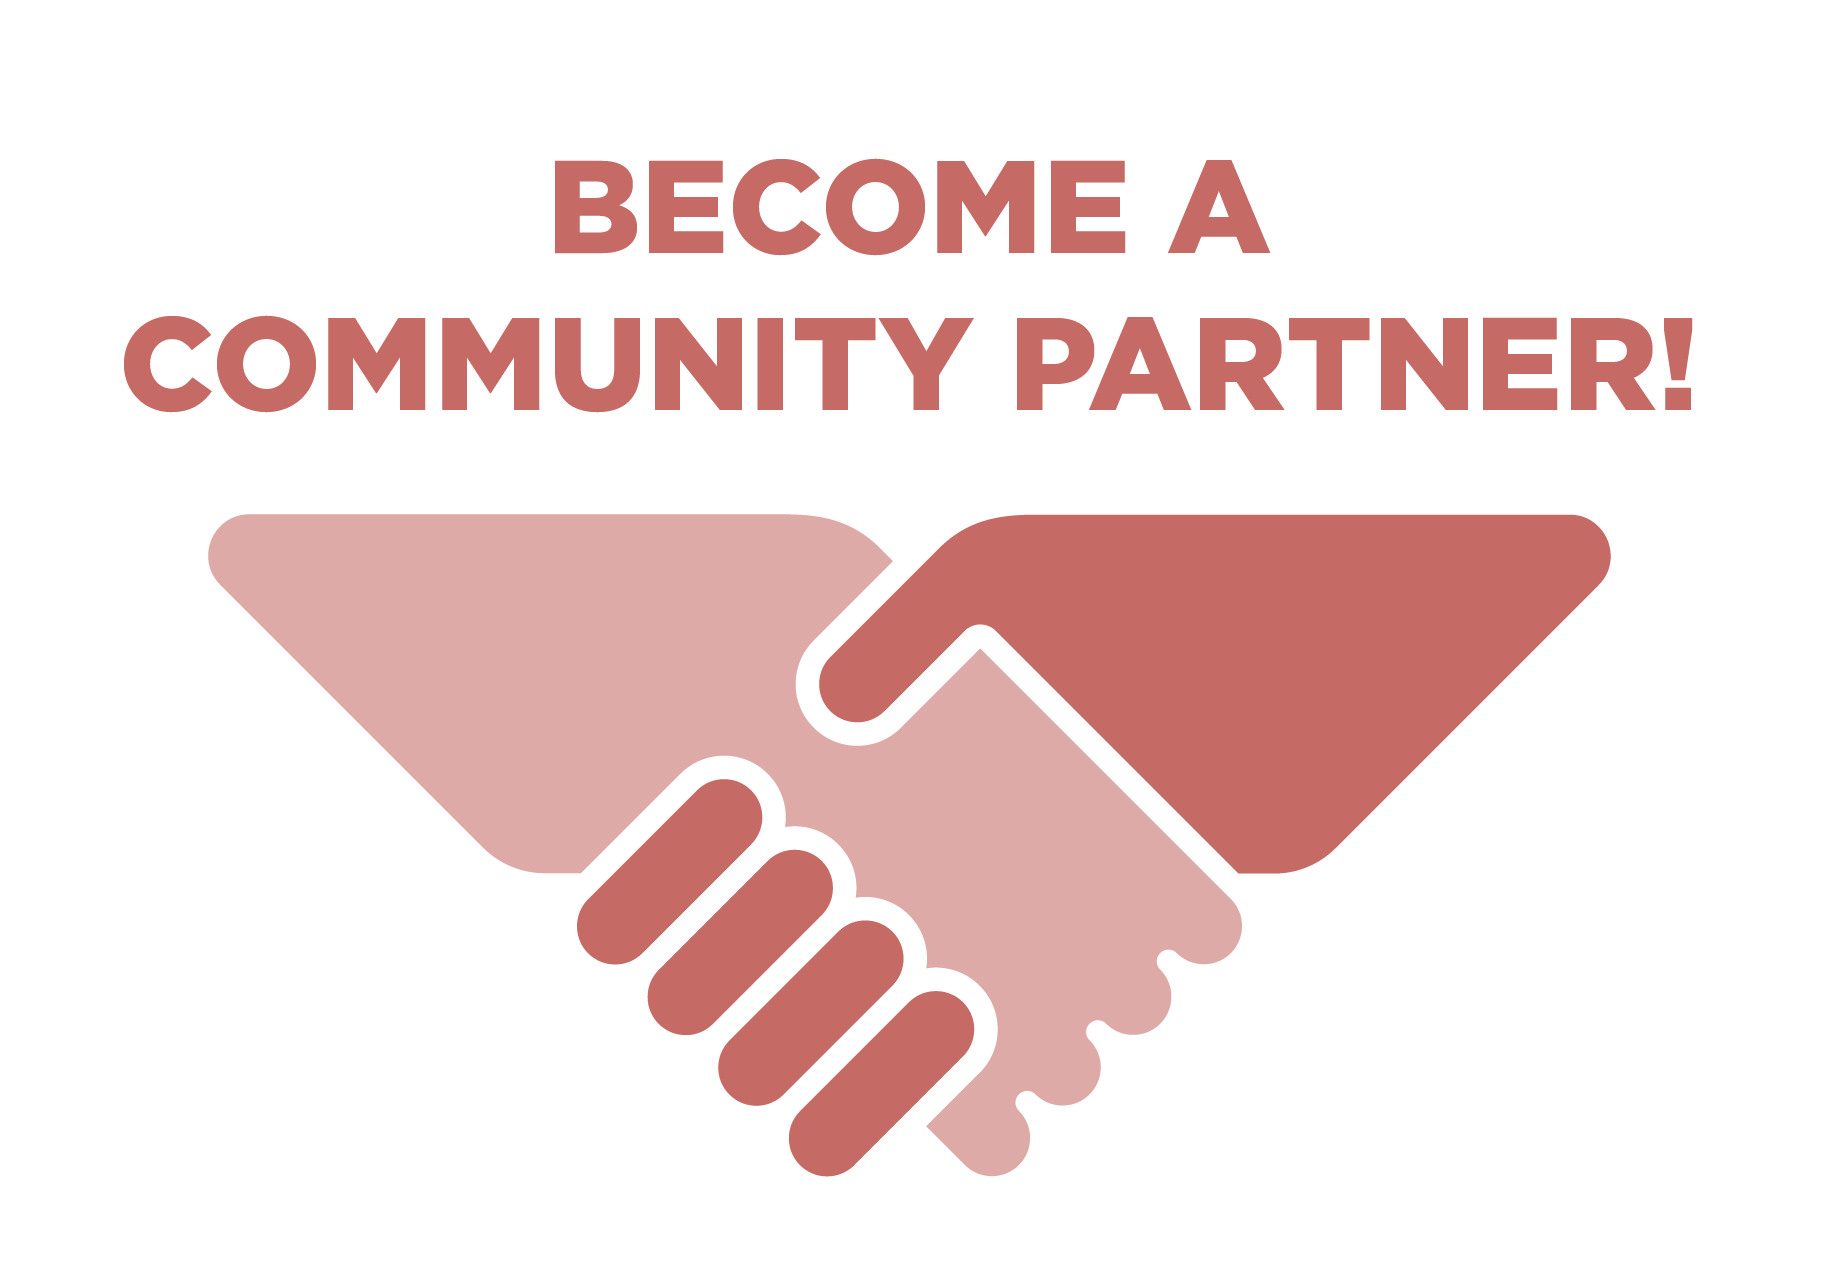 Community Partners image